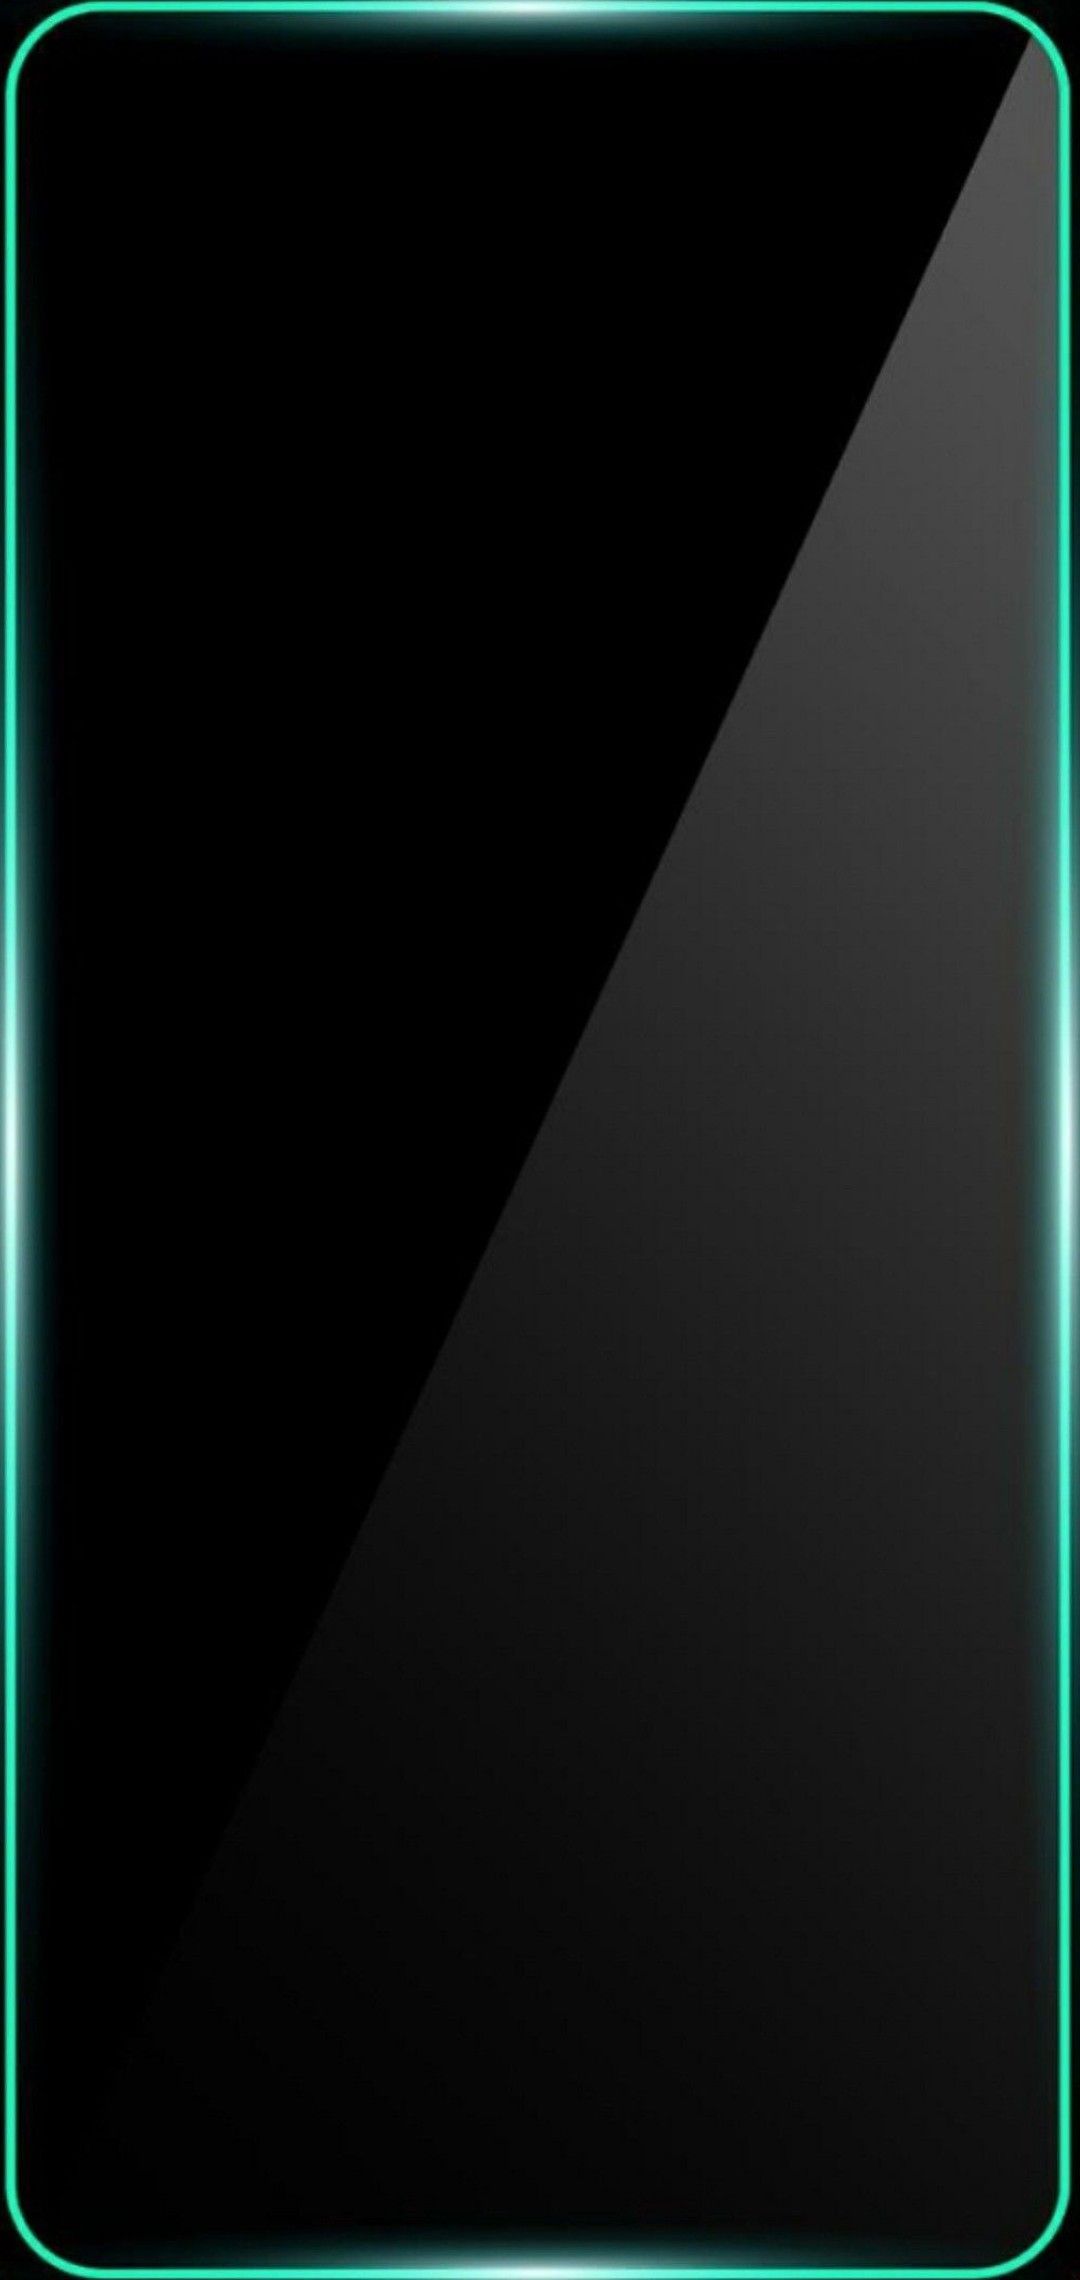 Green and black border line 1080x2280. Galaxy phone wallpaper, Cool wallpaper for phones, Live wallpaper iphone